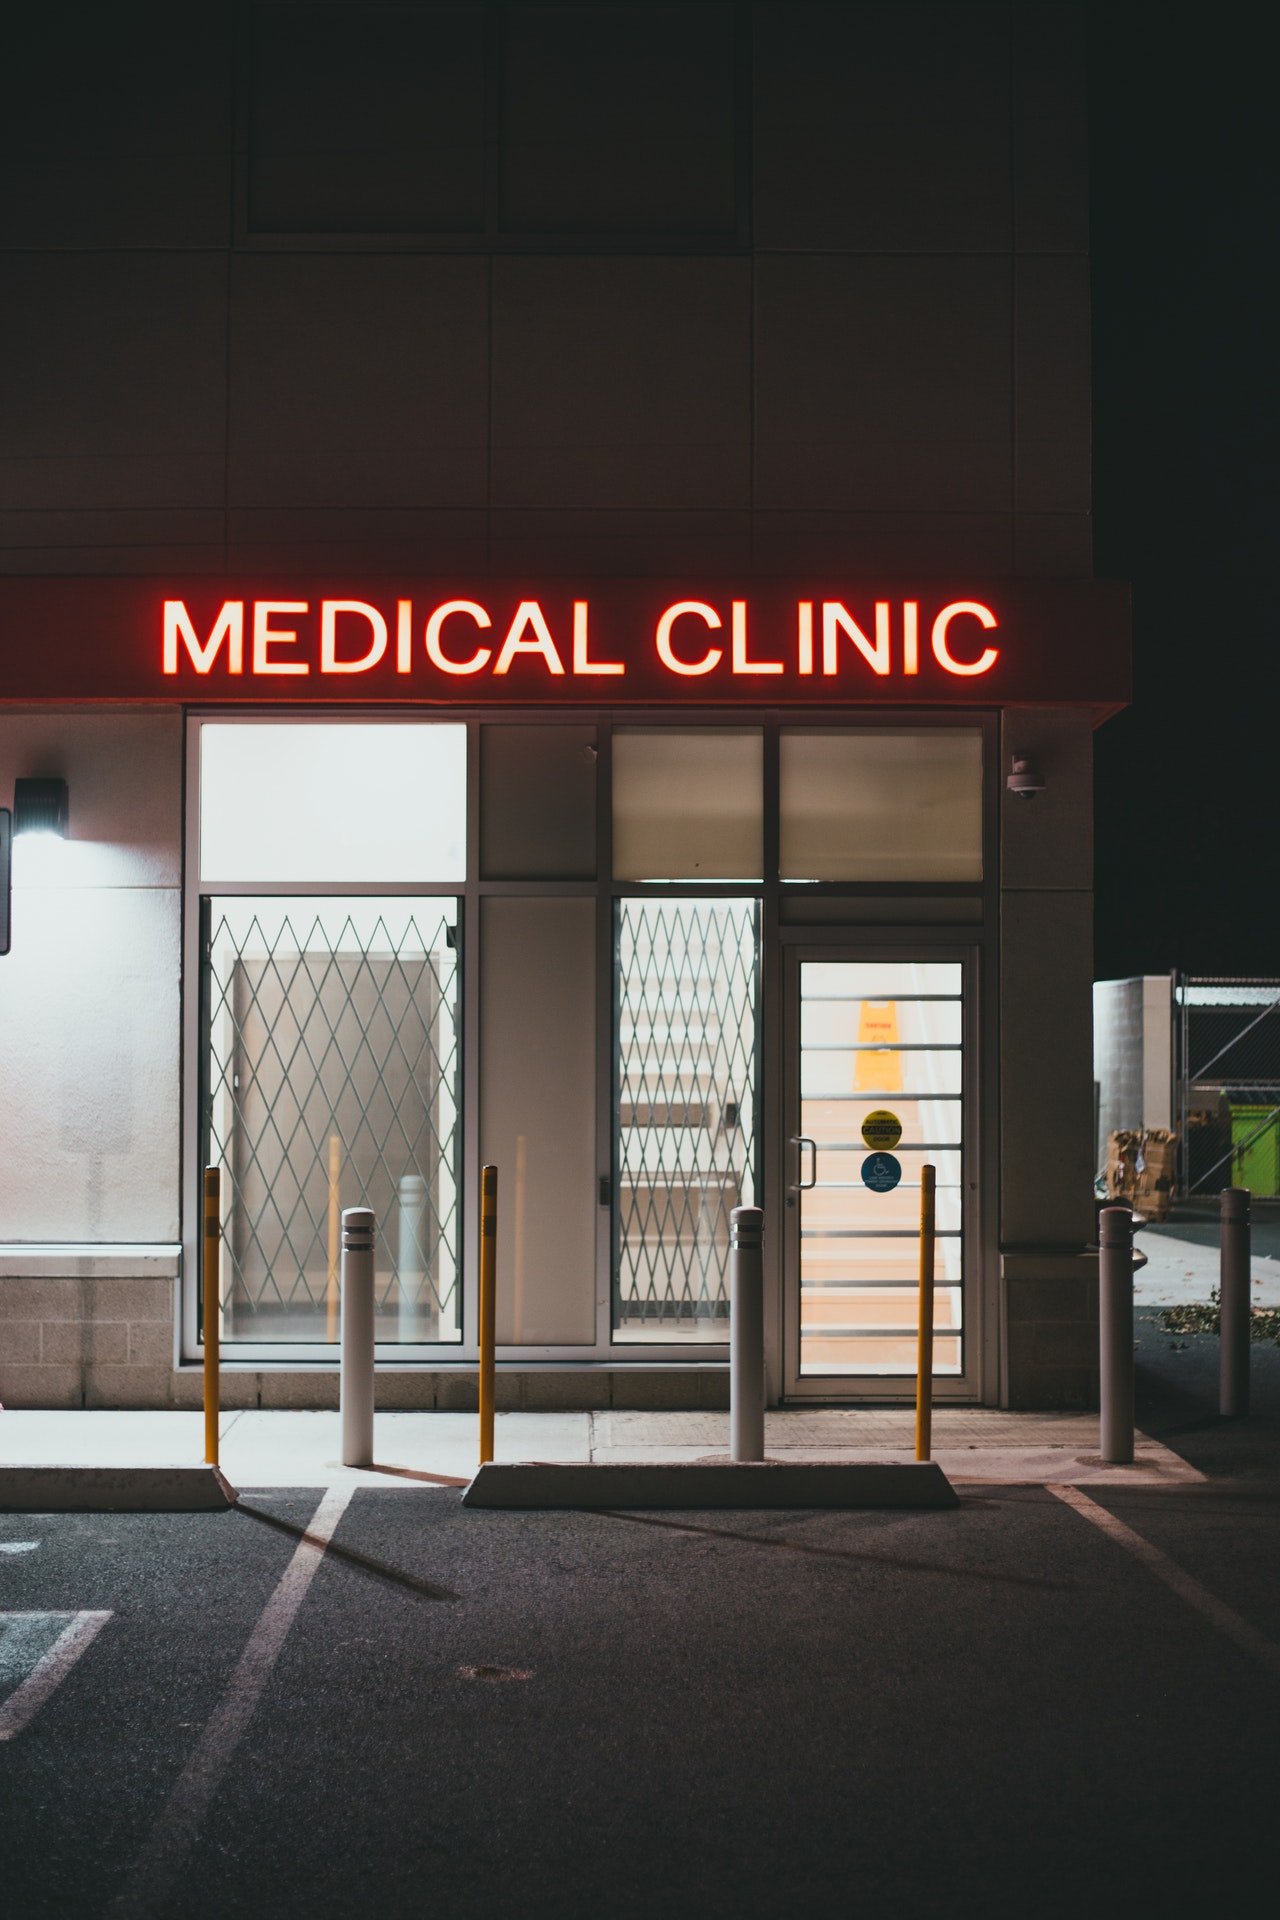 Medical clinic sign | Source: Pexels